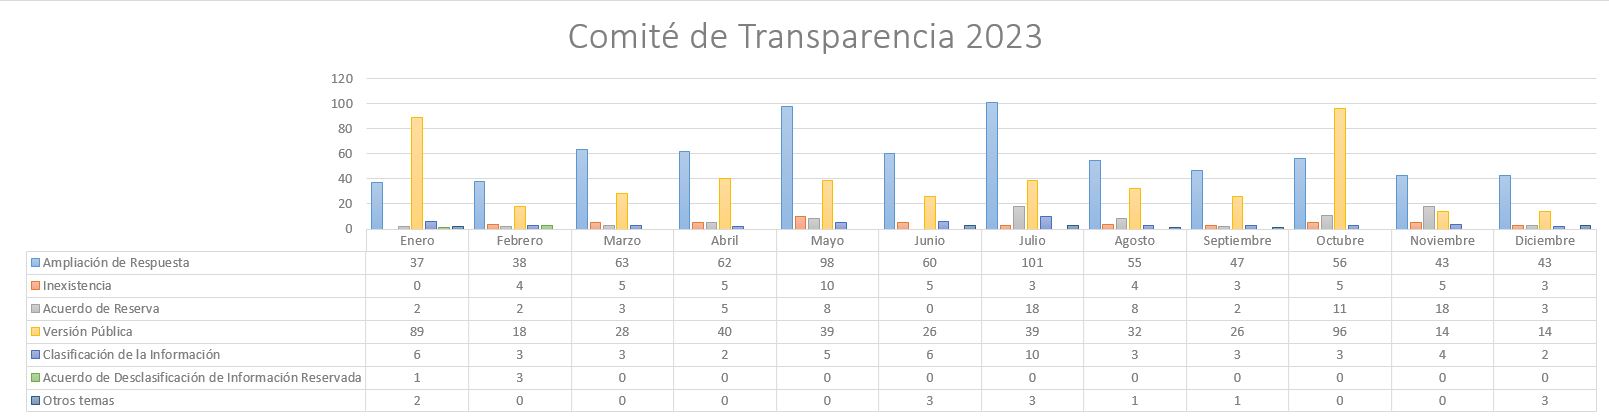 Gráficas del Comité de Transparencia 2023